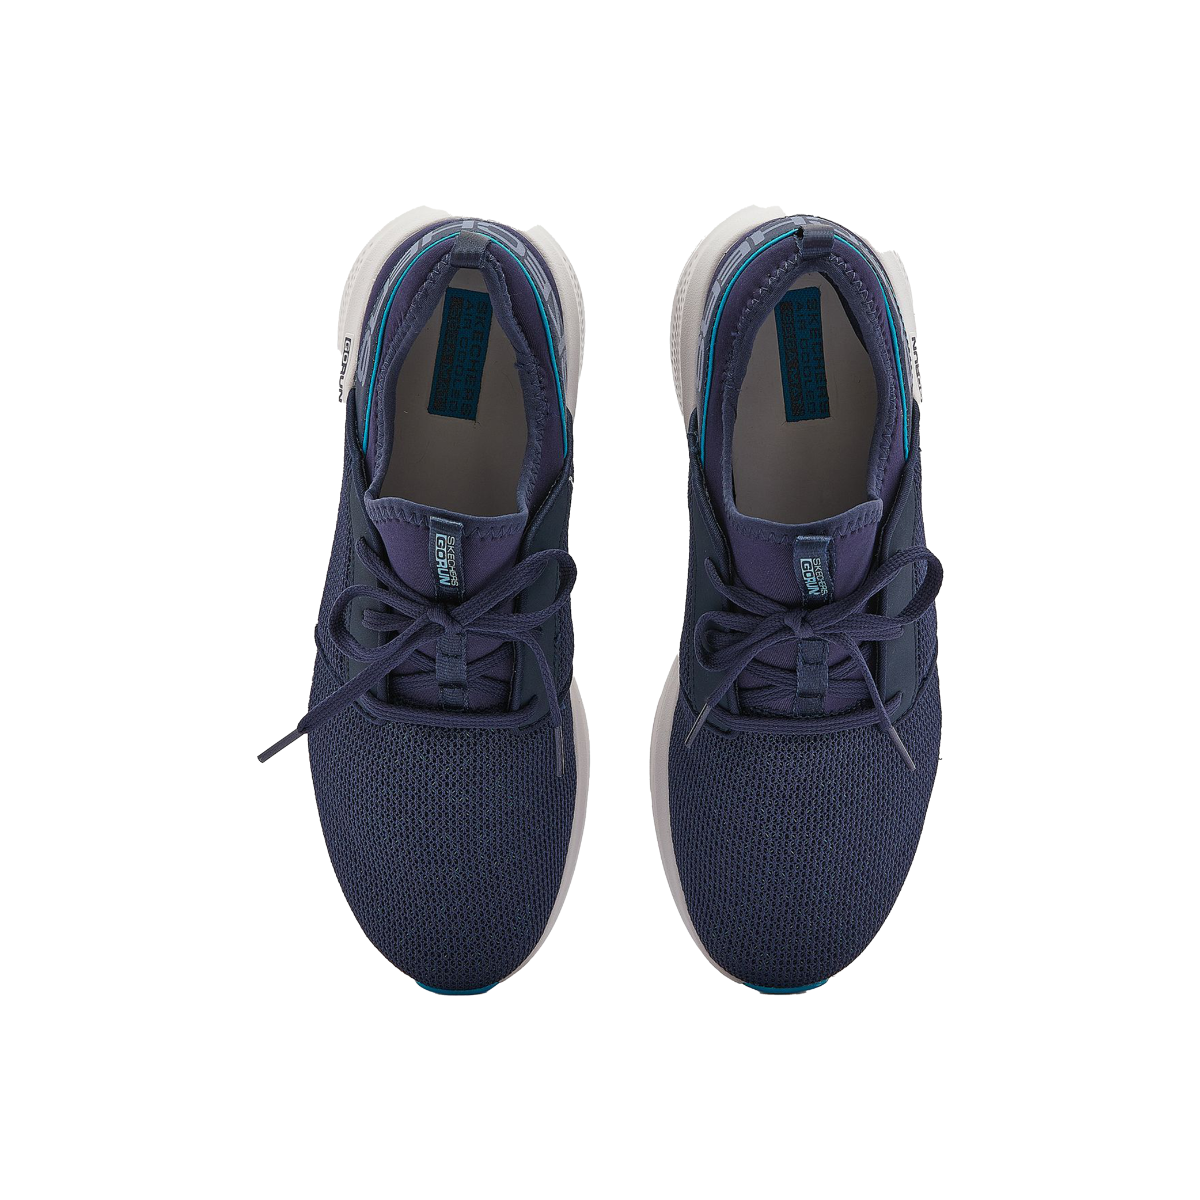 Skechers Go Run Elevate Shoes For Women, Dark Blue